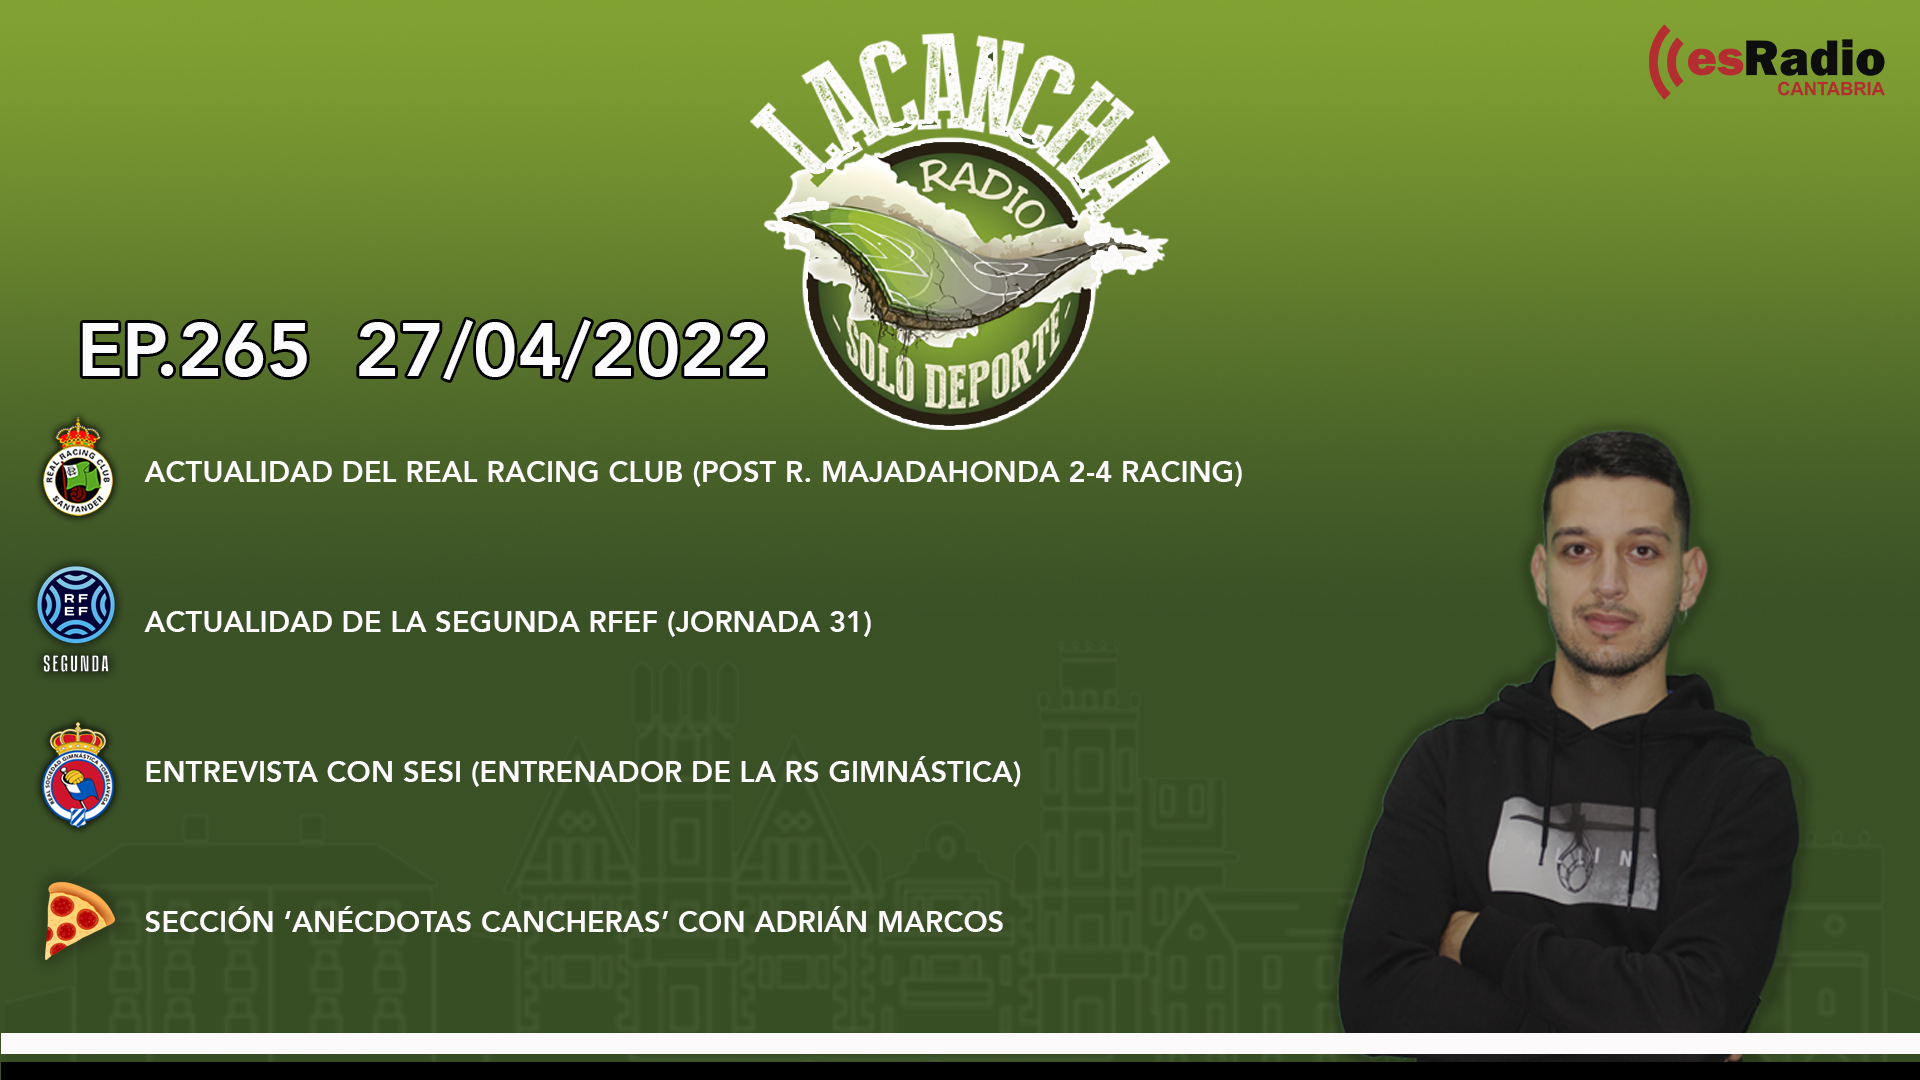 La Cancha Ep. 265 (27/04/2022)